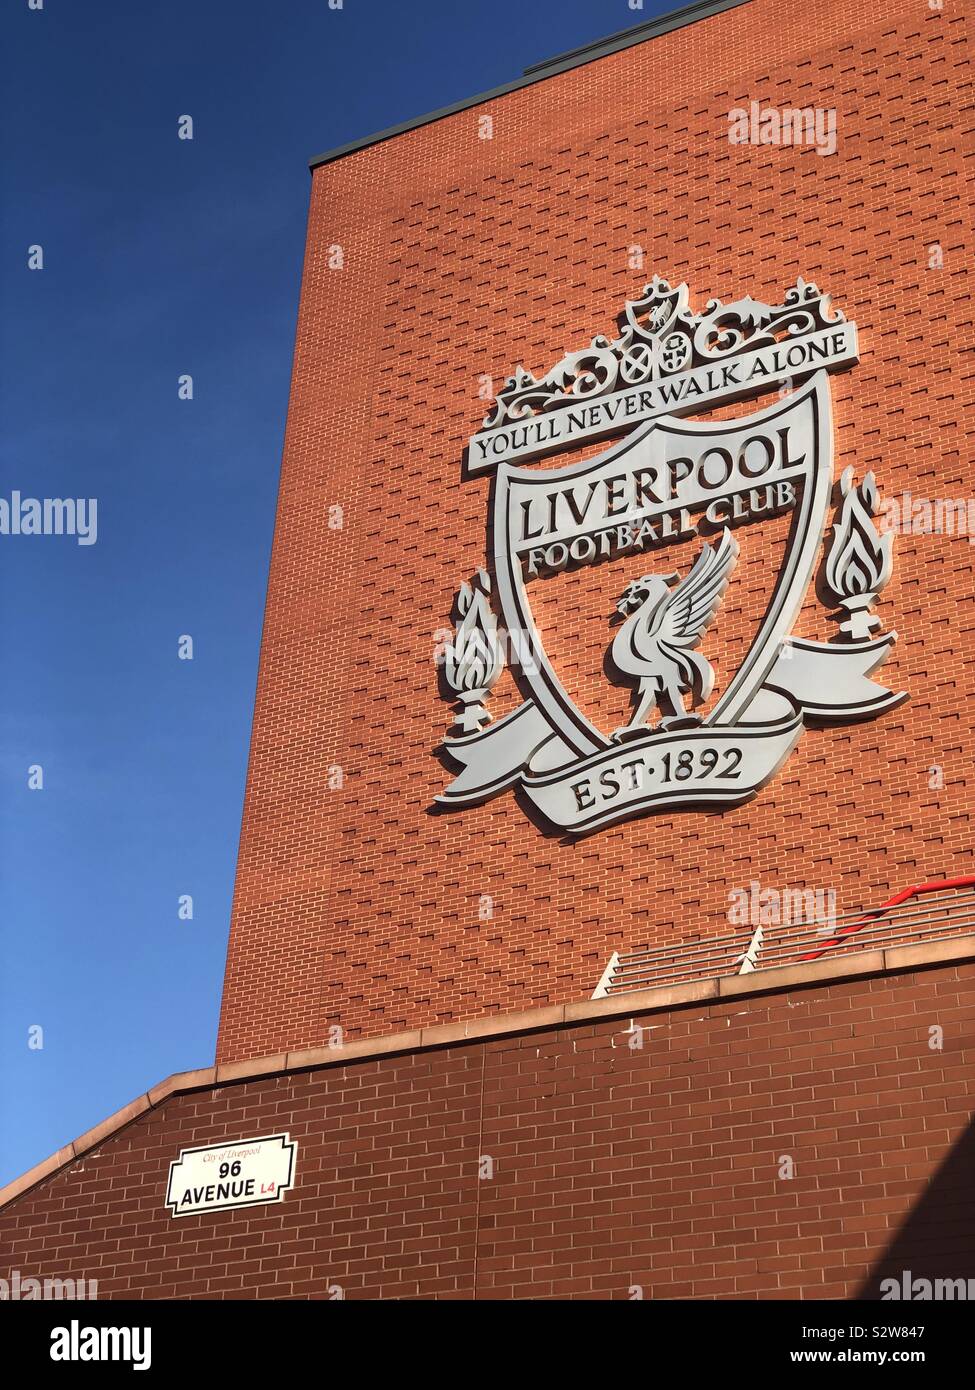 Anfield Stadion Liverpool Football Club. You'll never walk alone lfc Crest Badge auf dem Stadion an der Wand. Stockfoto